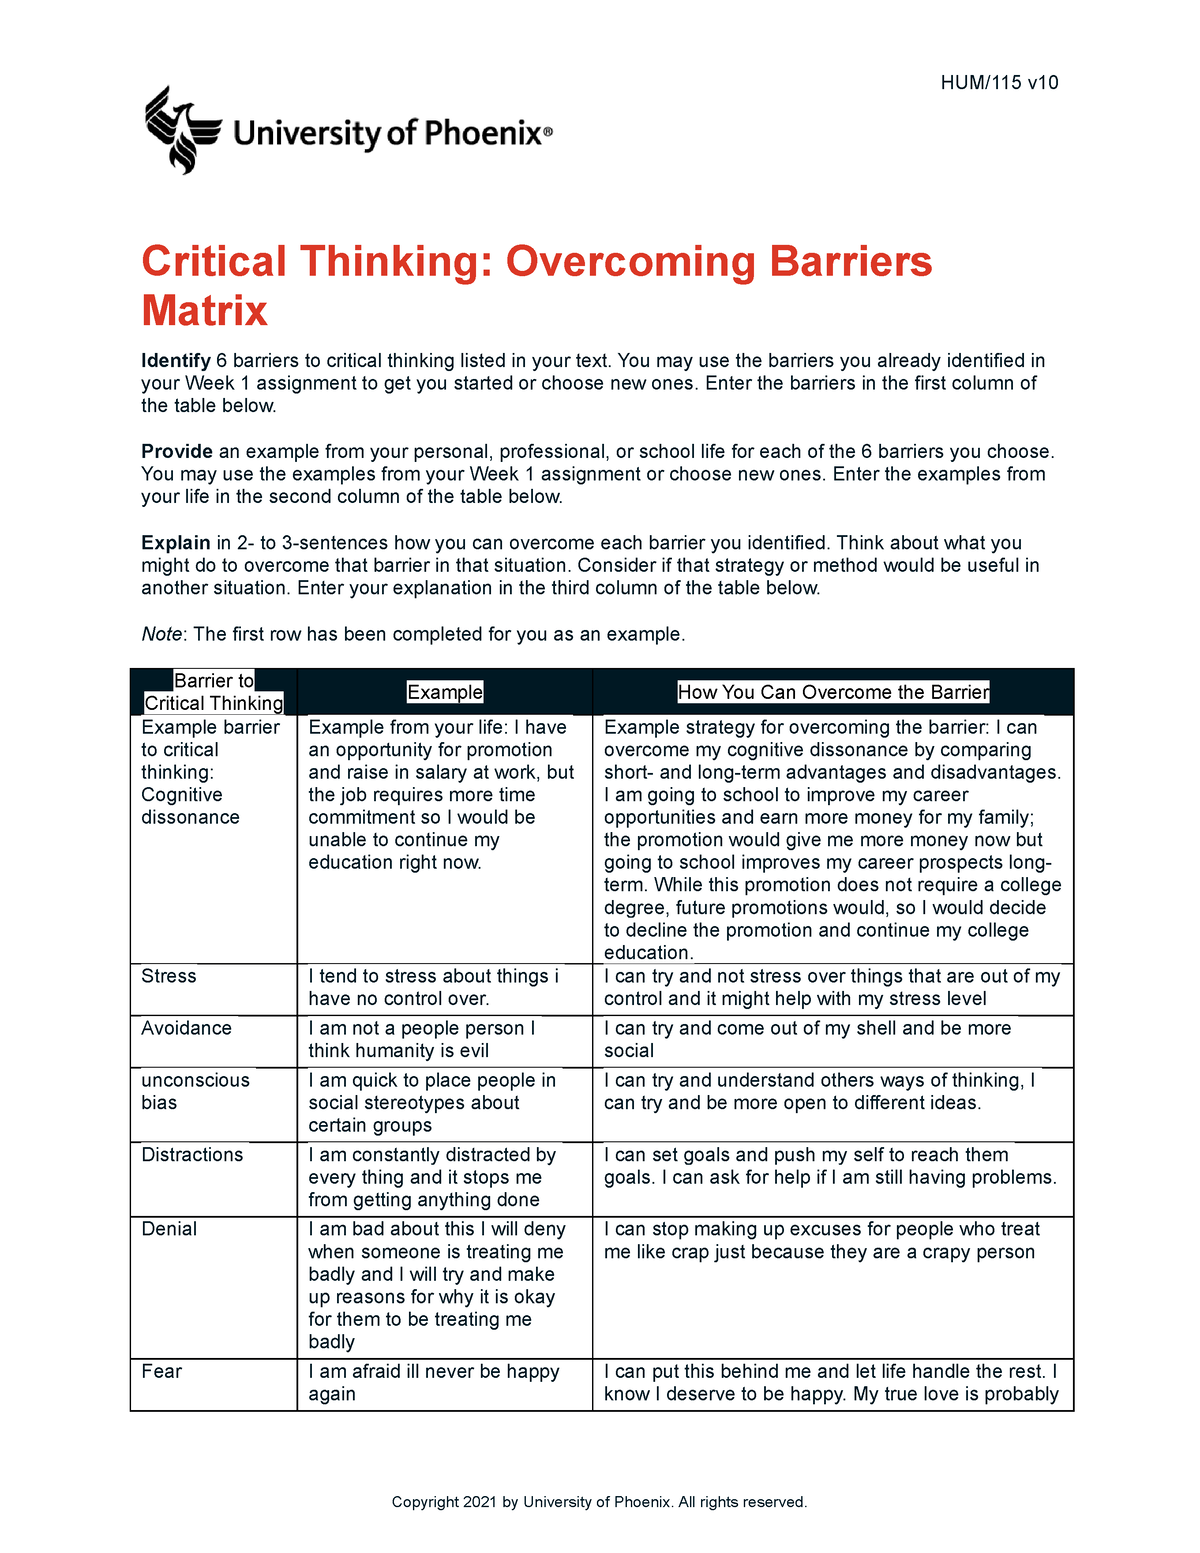 summative assessment critical thinking reflection